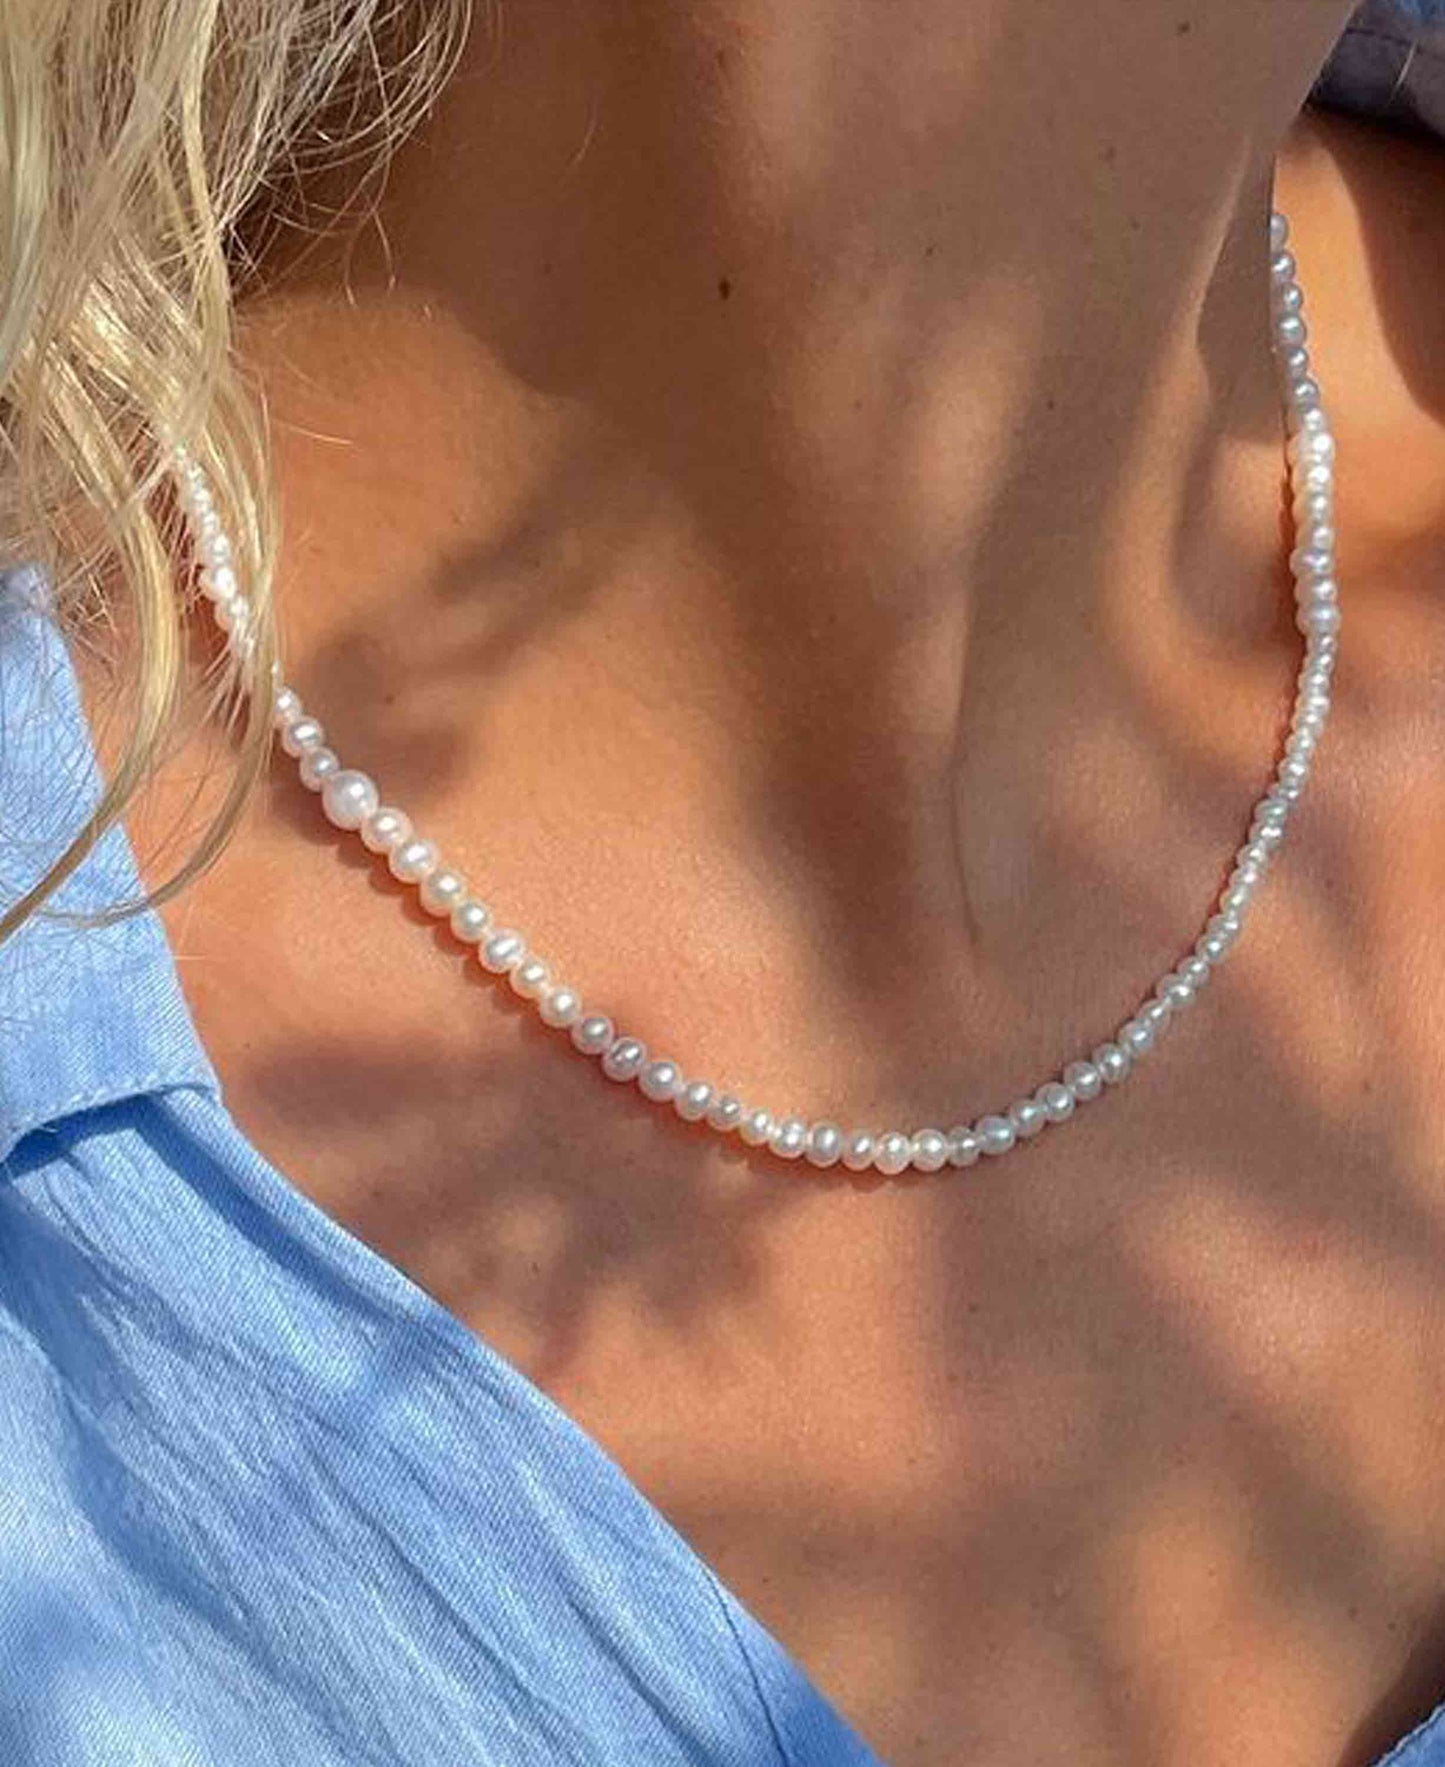 Milkyway plain necklace